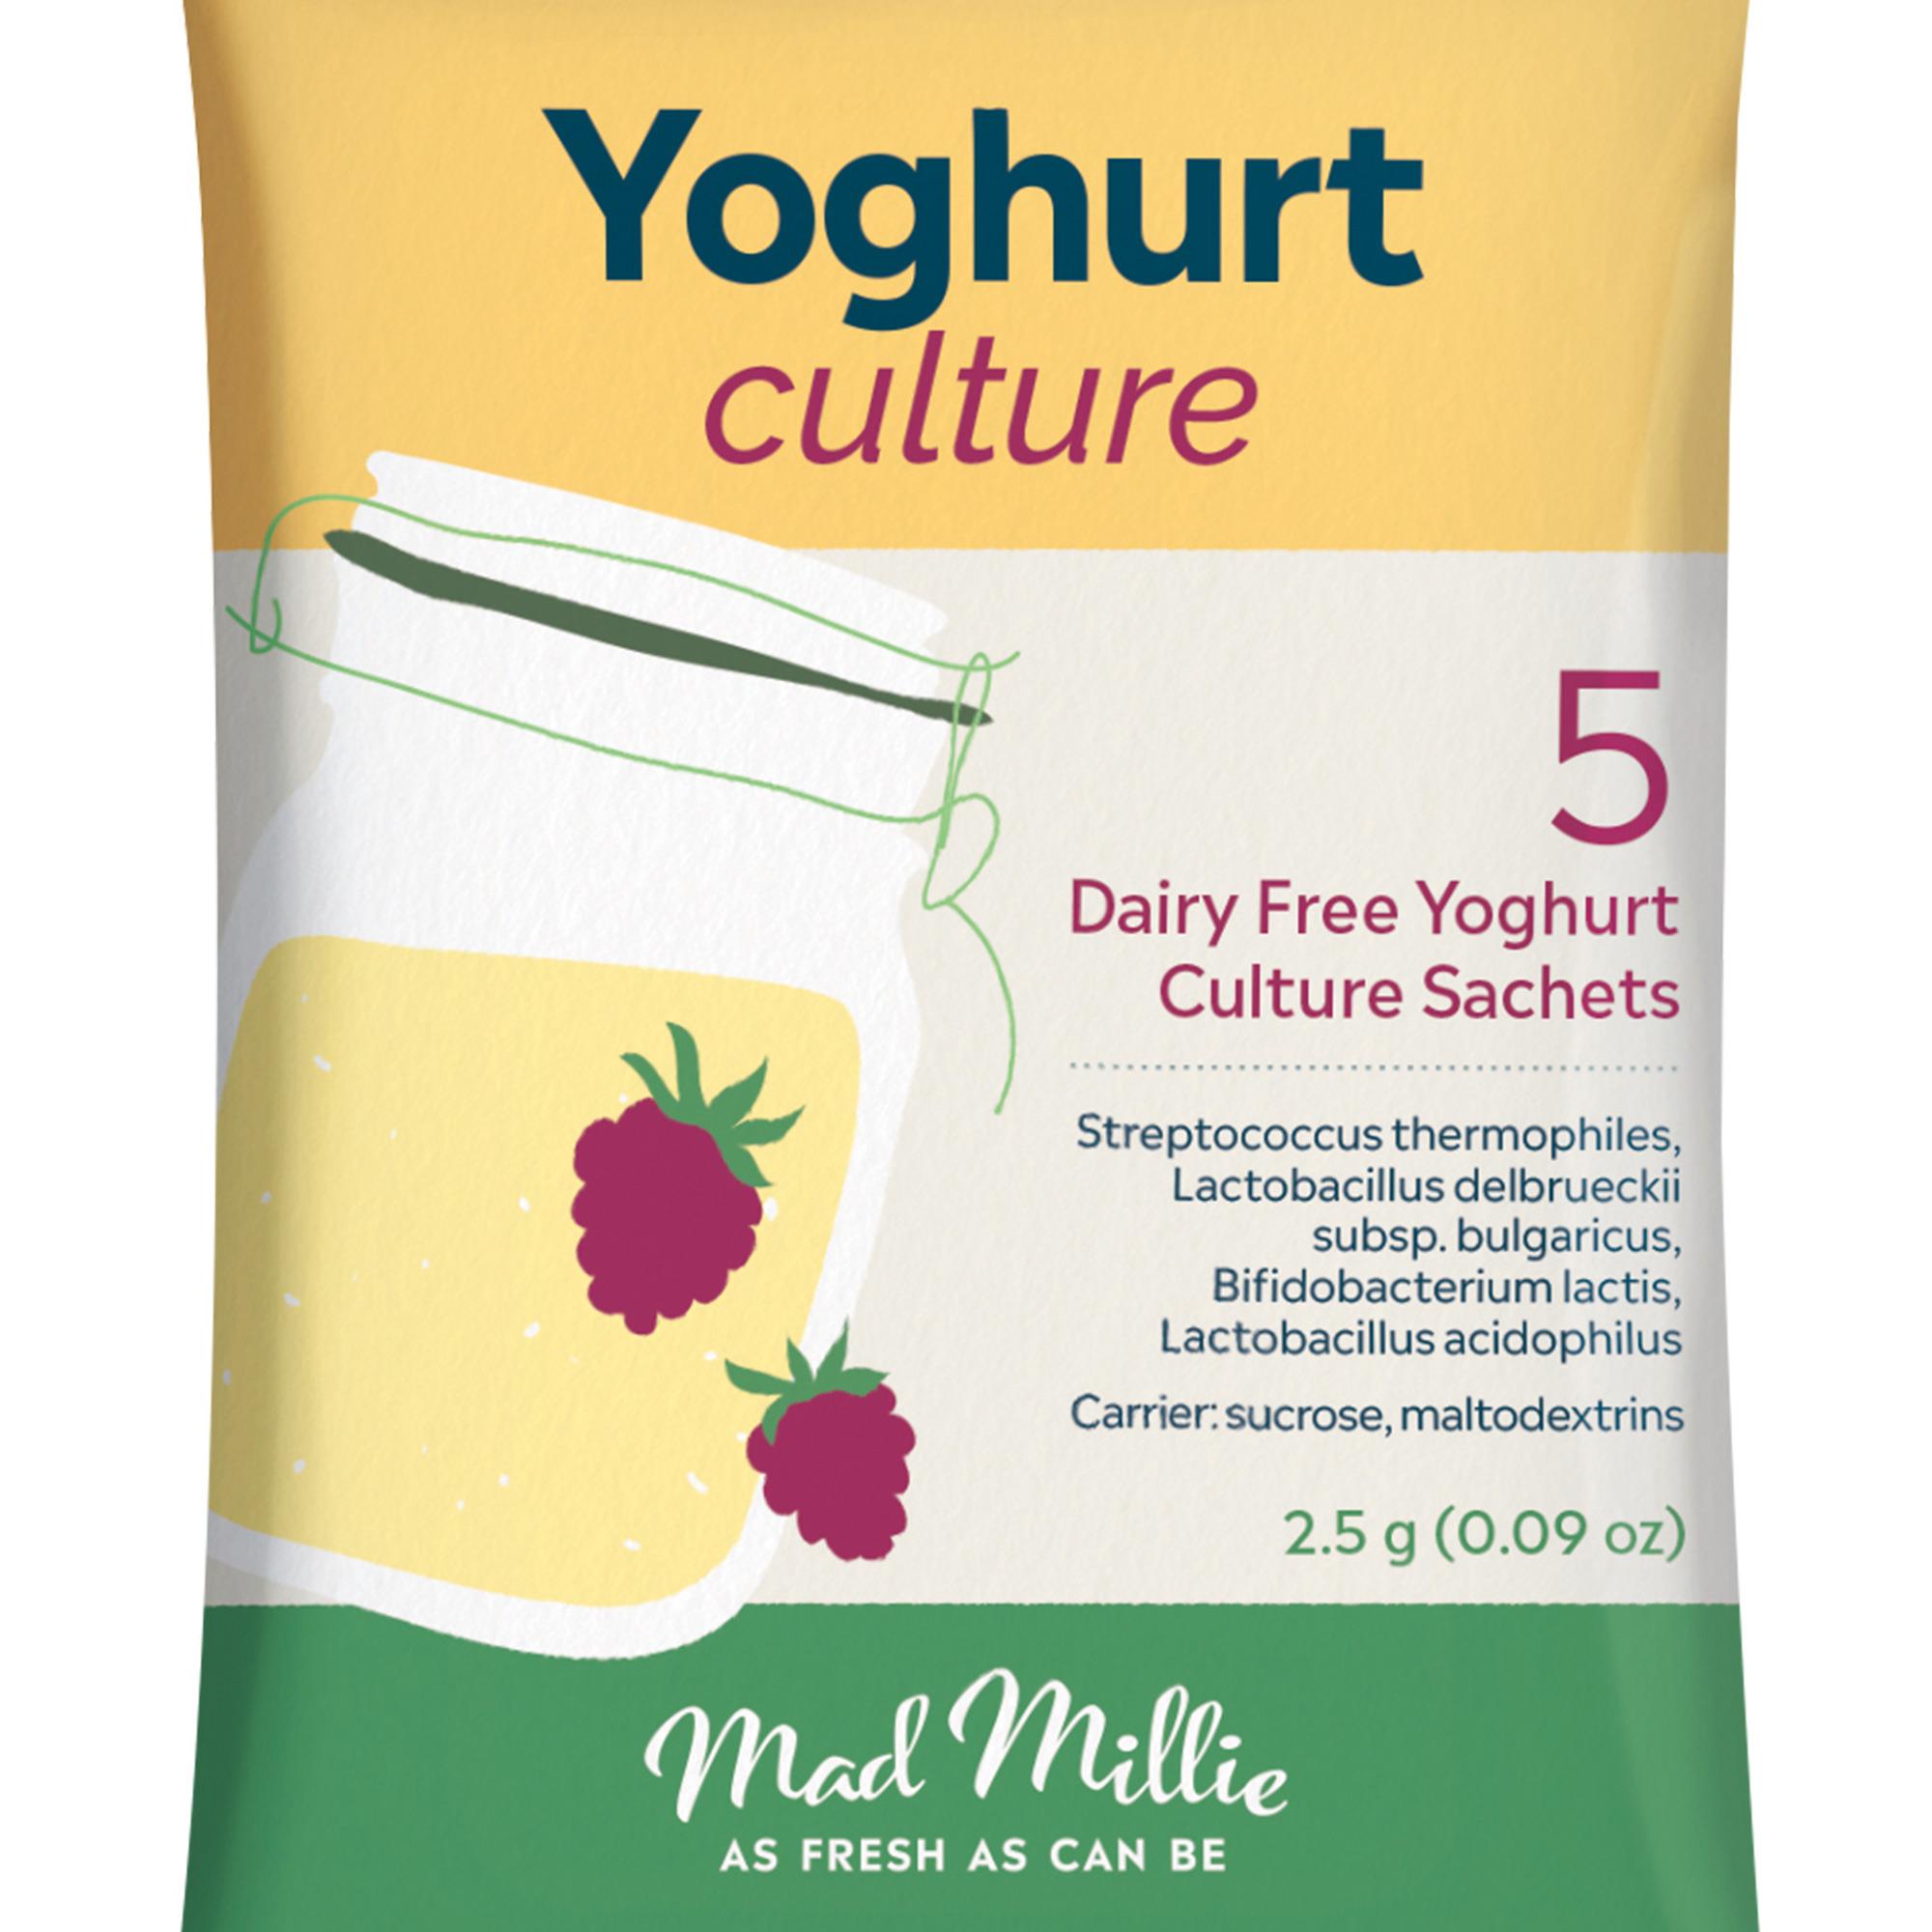 Mad Millie Probiotic Yoghurt Cultures Sachet Dairy Free Image 2